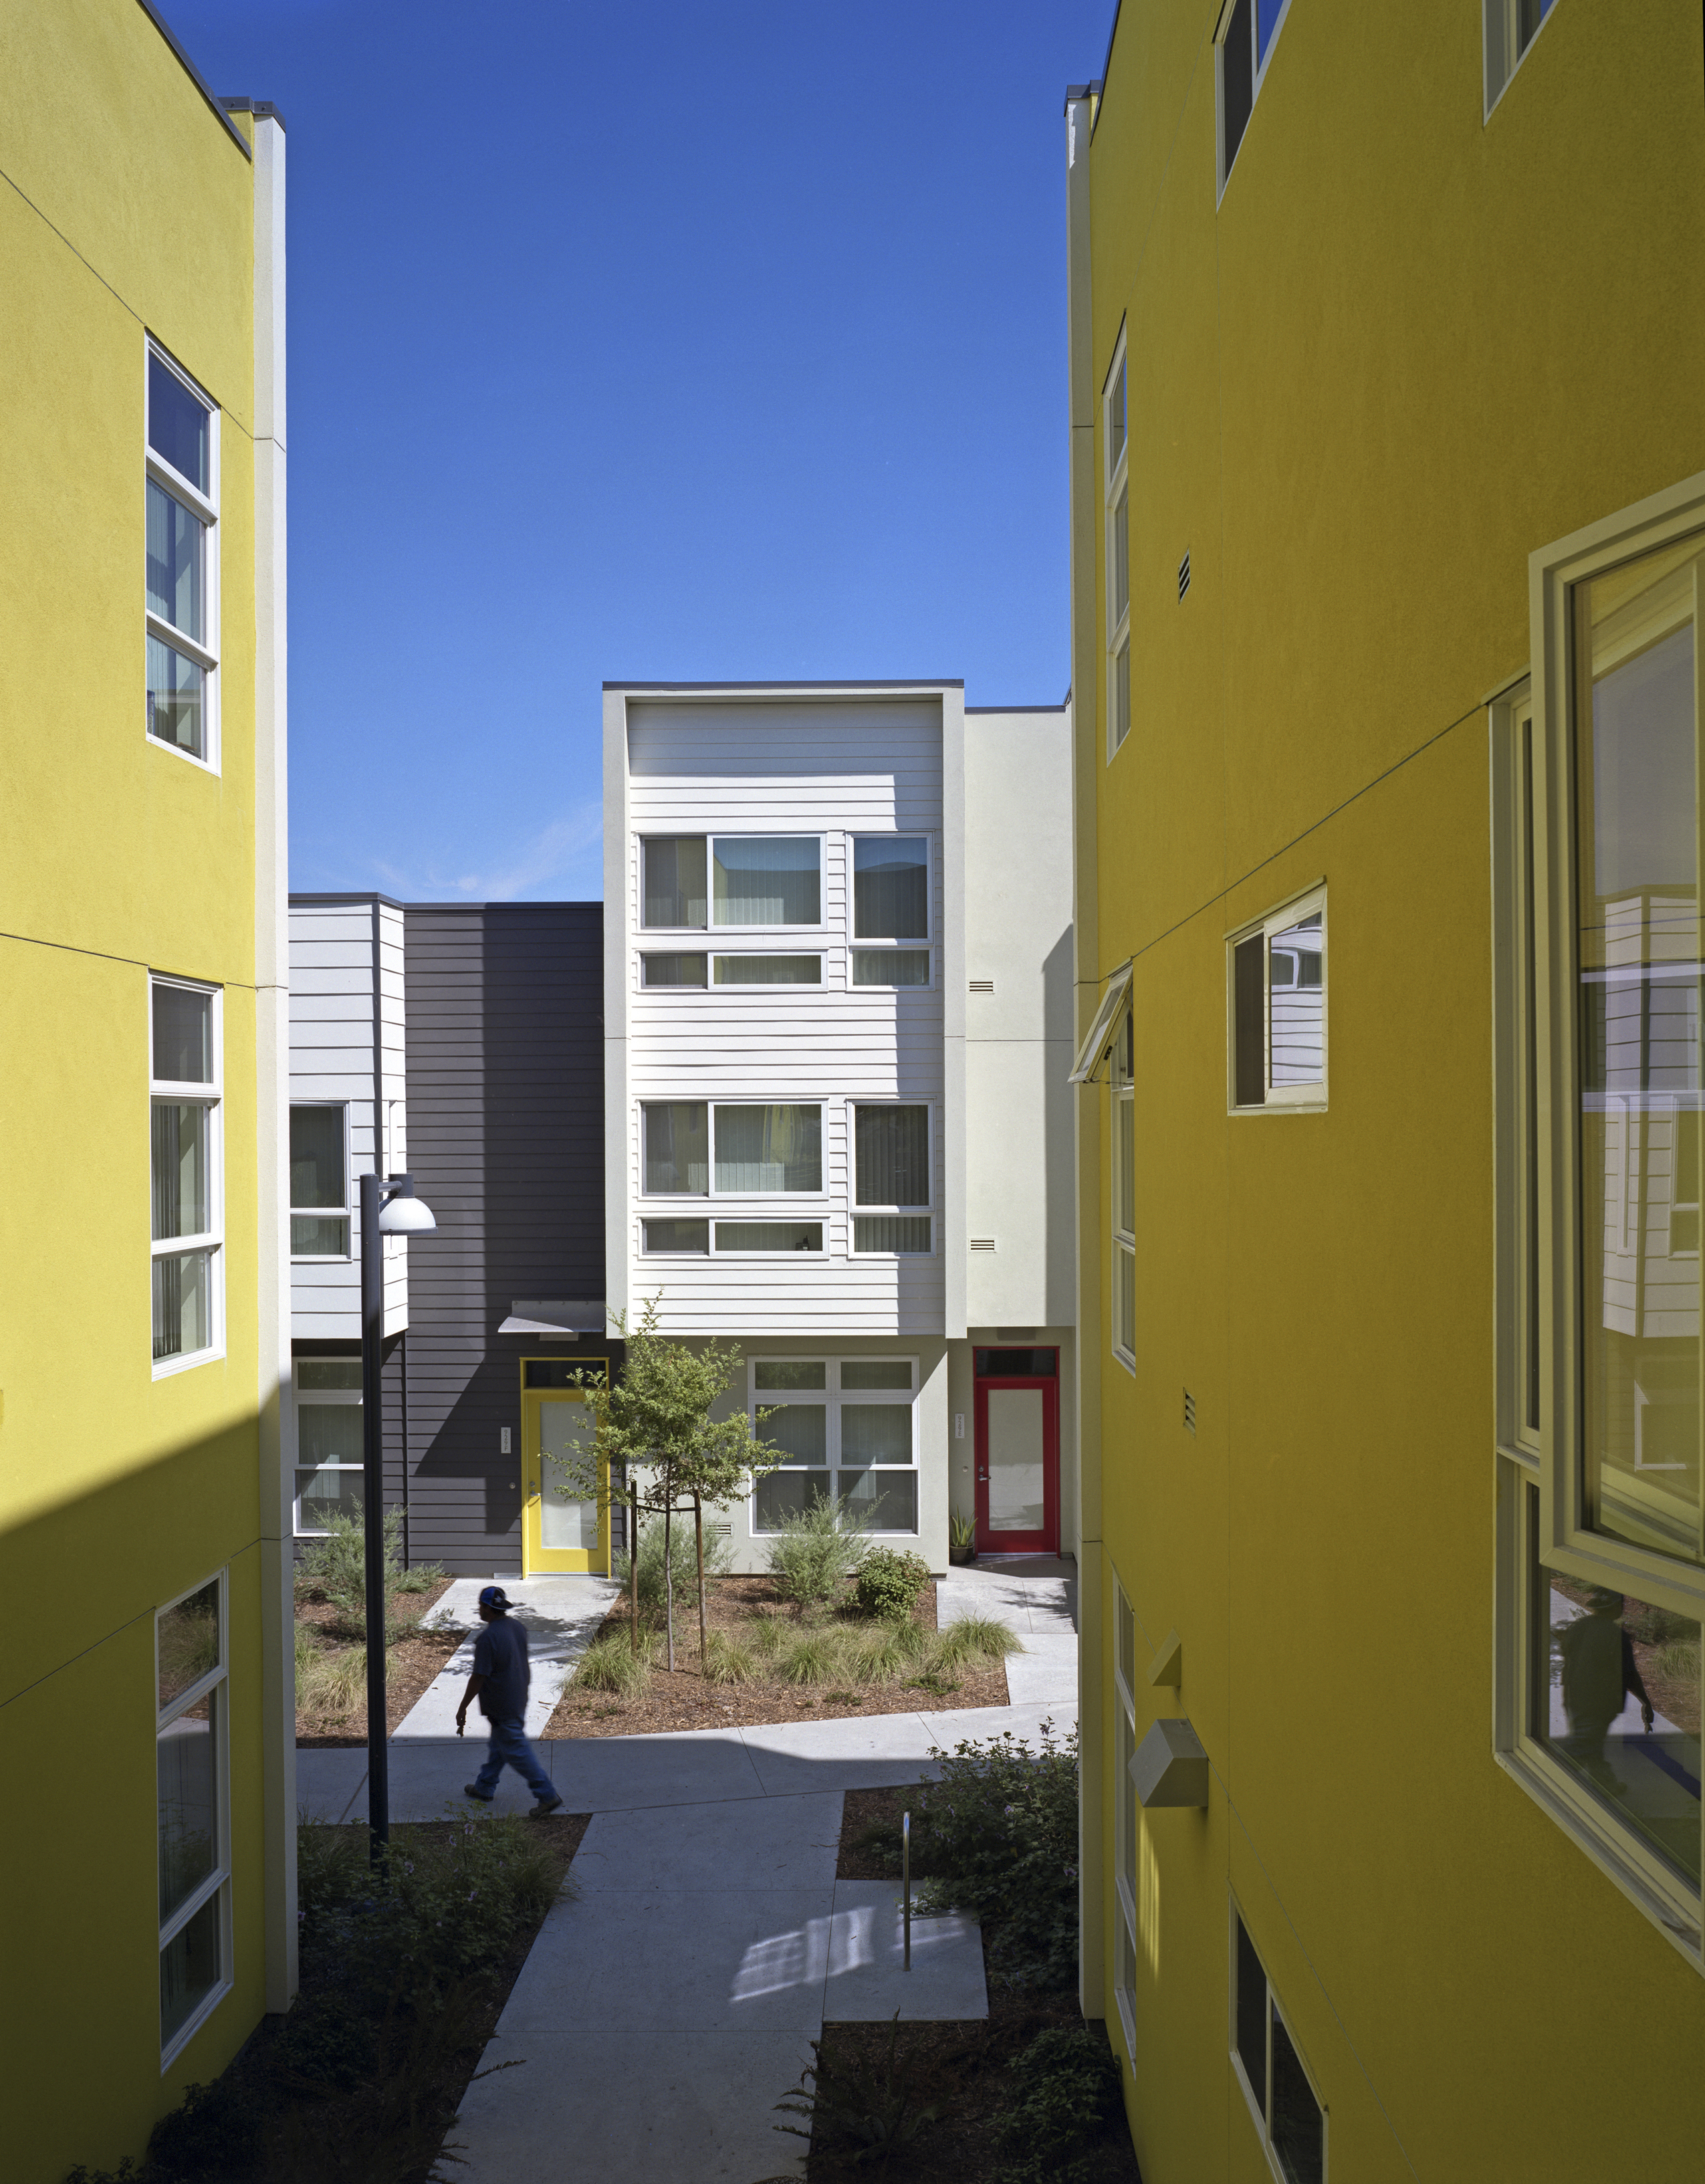 Courtyard view at Tassafaronga Village in East Oakland, CA. 